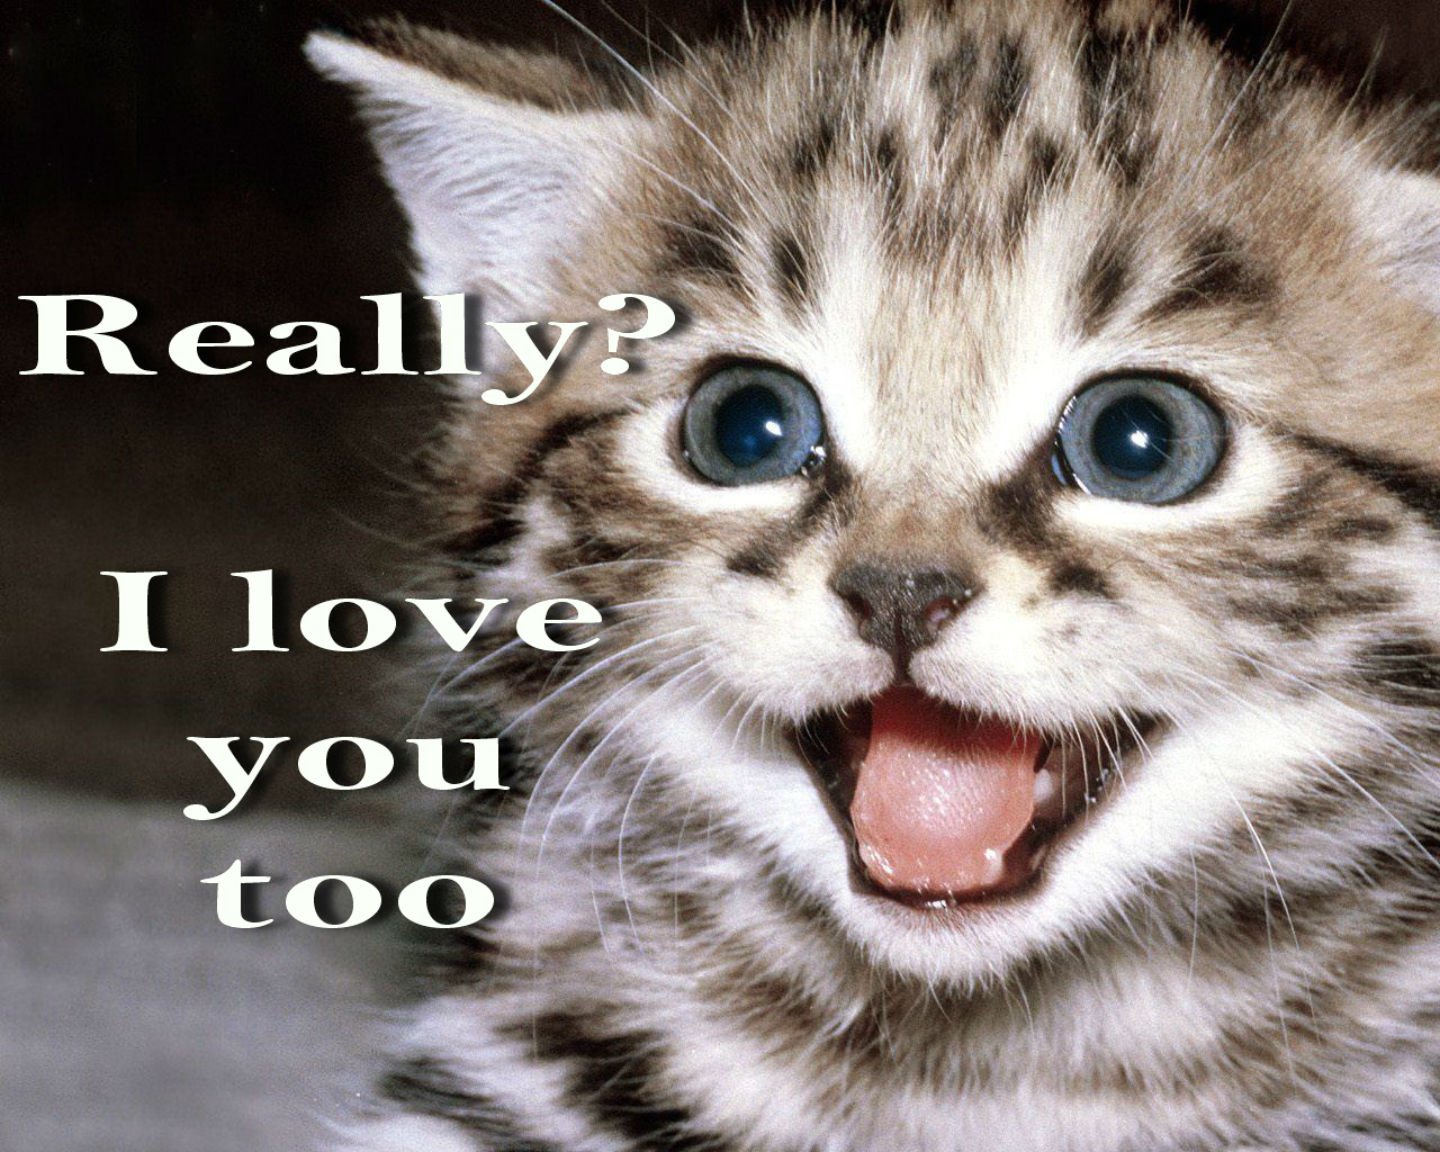 Meme Quote Funny Humor Grumpy Kitten Mood Love Wallpaper Background